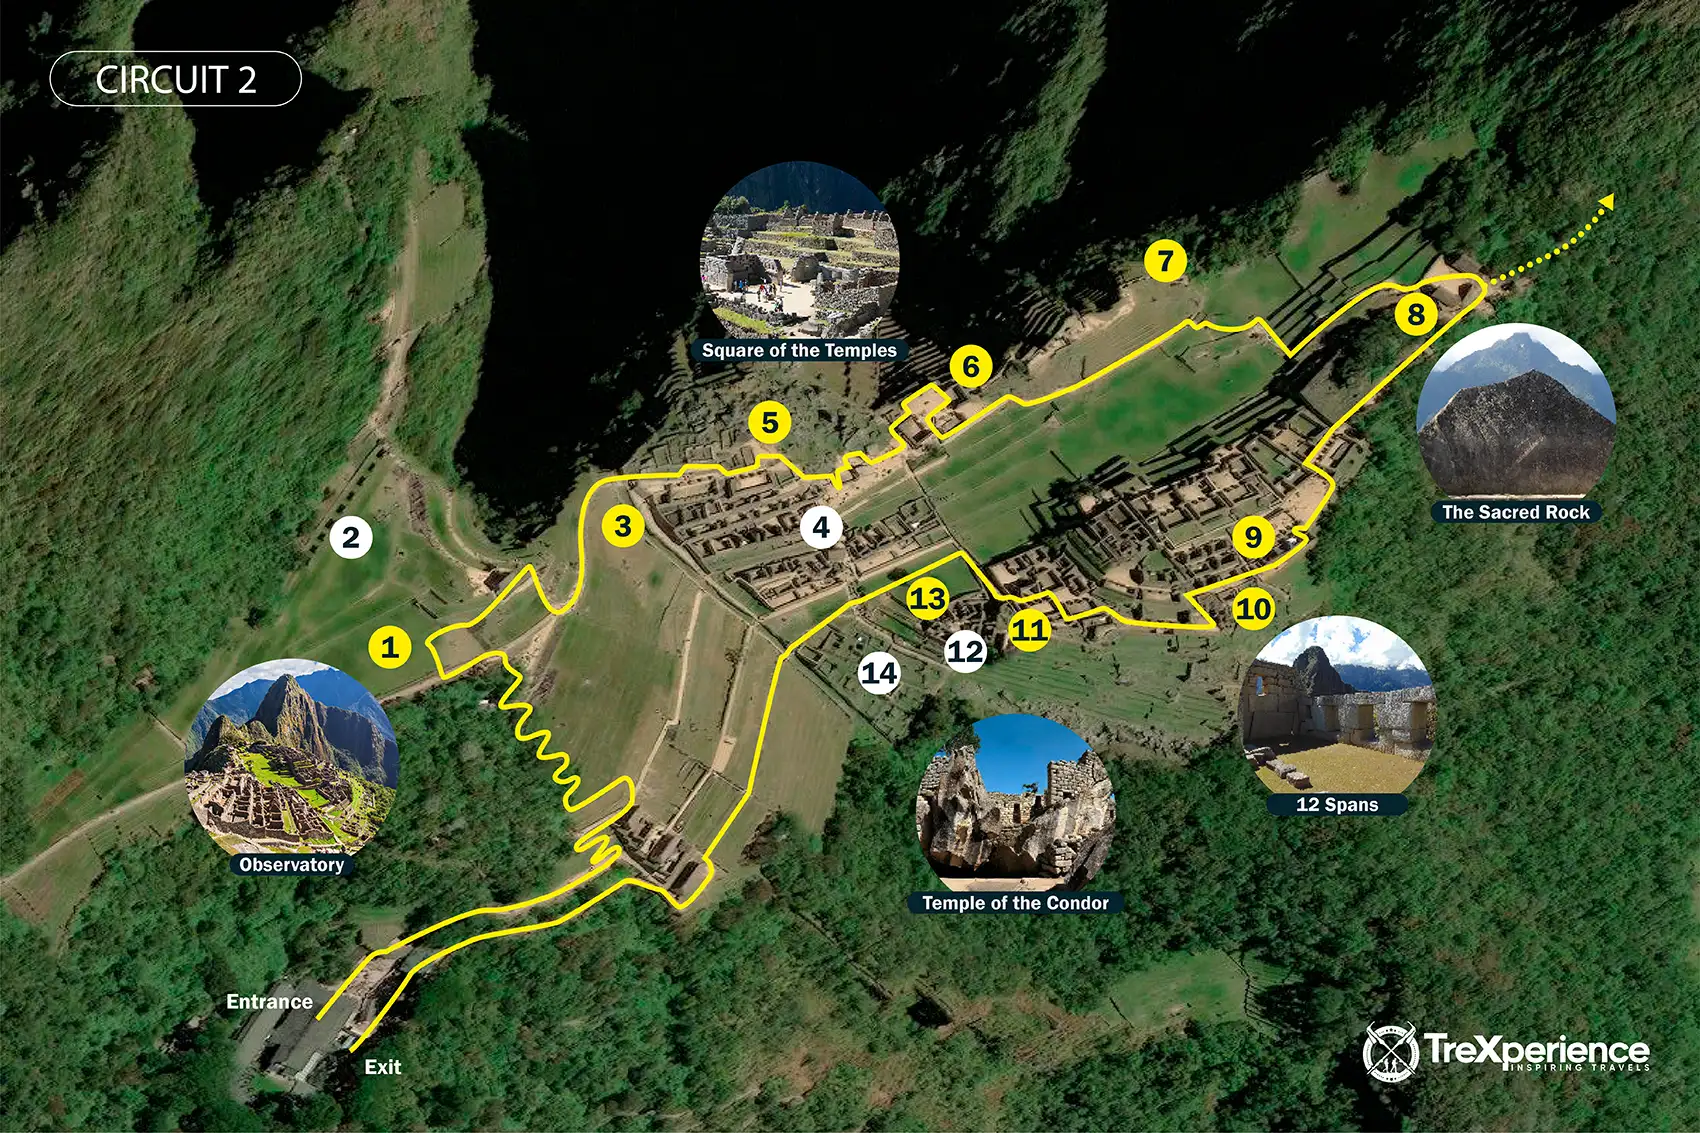 Map of Circuit 2 in Machu Picchu - Full Day tour to Machu Picchu | TreXperience